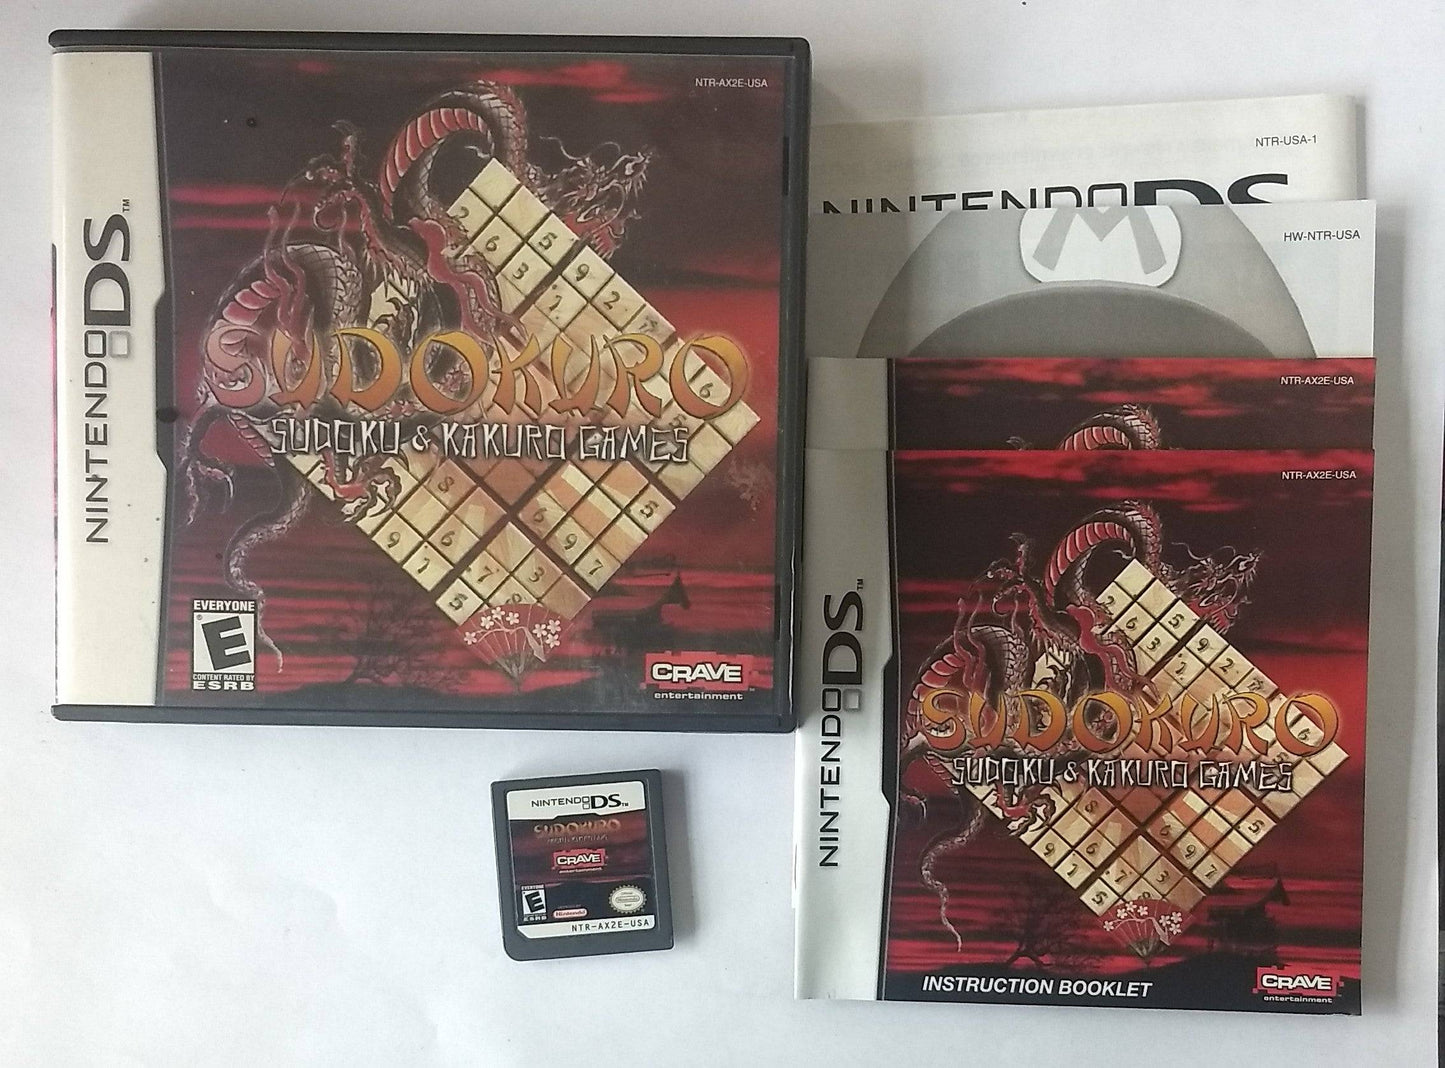 SUDOKURO (NINTENDO DS) - jeux video game-x